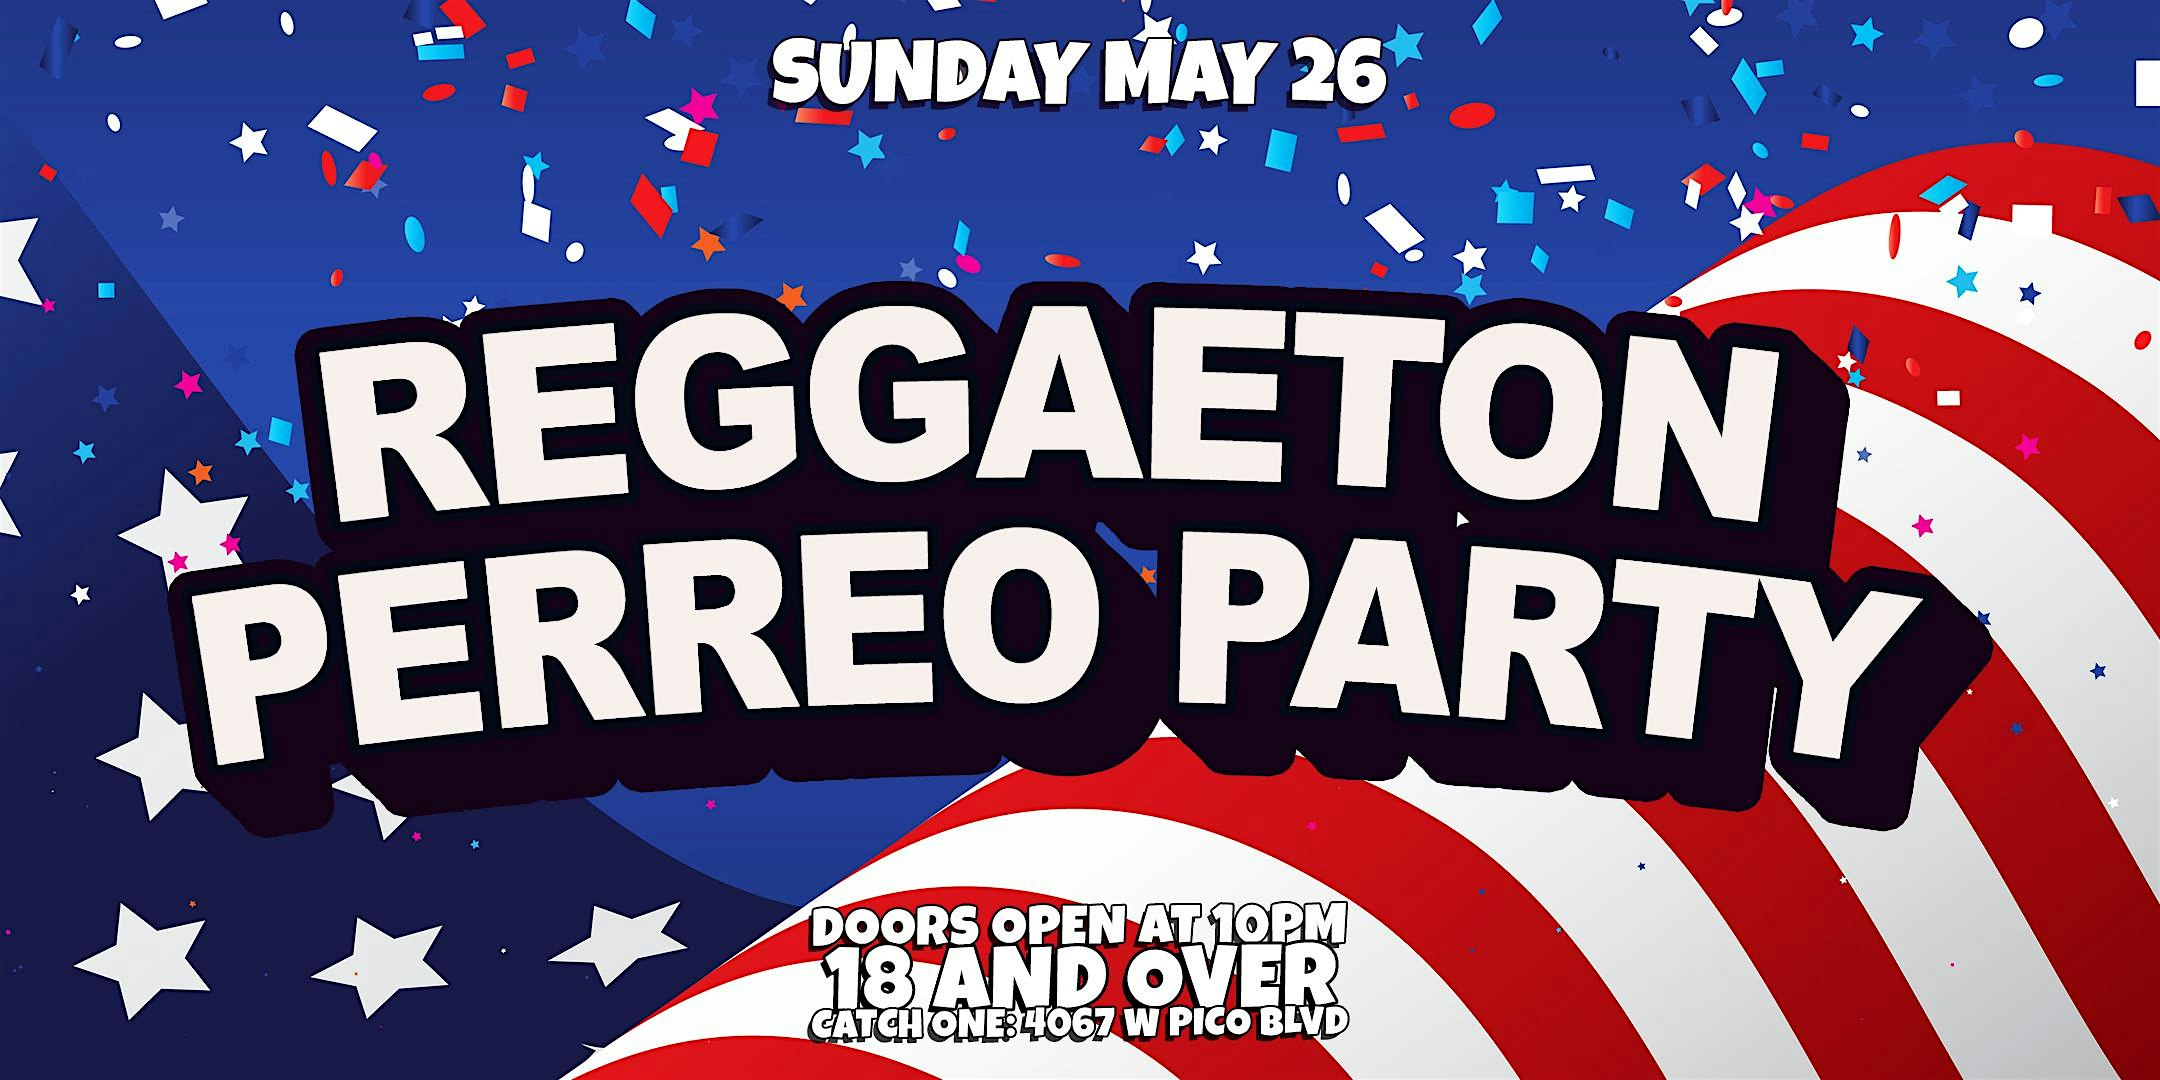 Biggest Reggaeton Perreo Party in Los Angeles! MDW! 18+